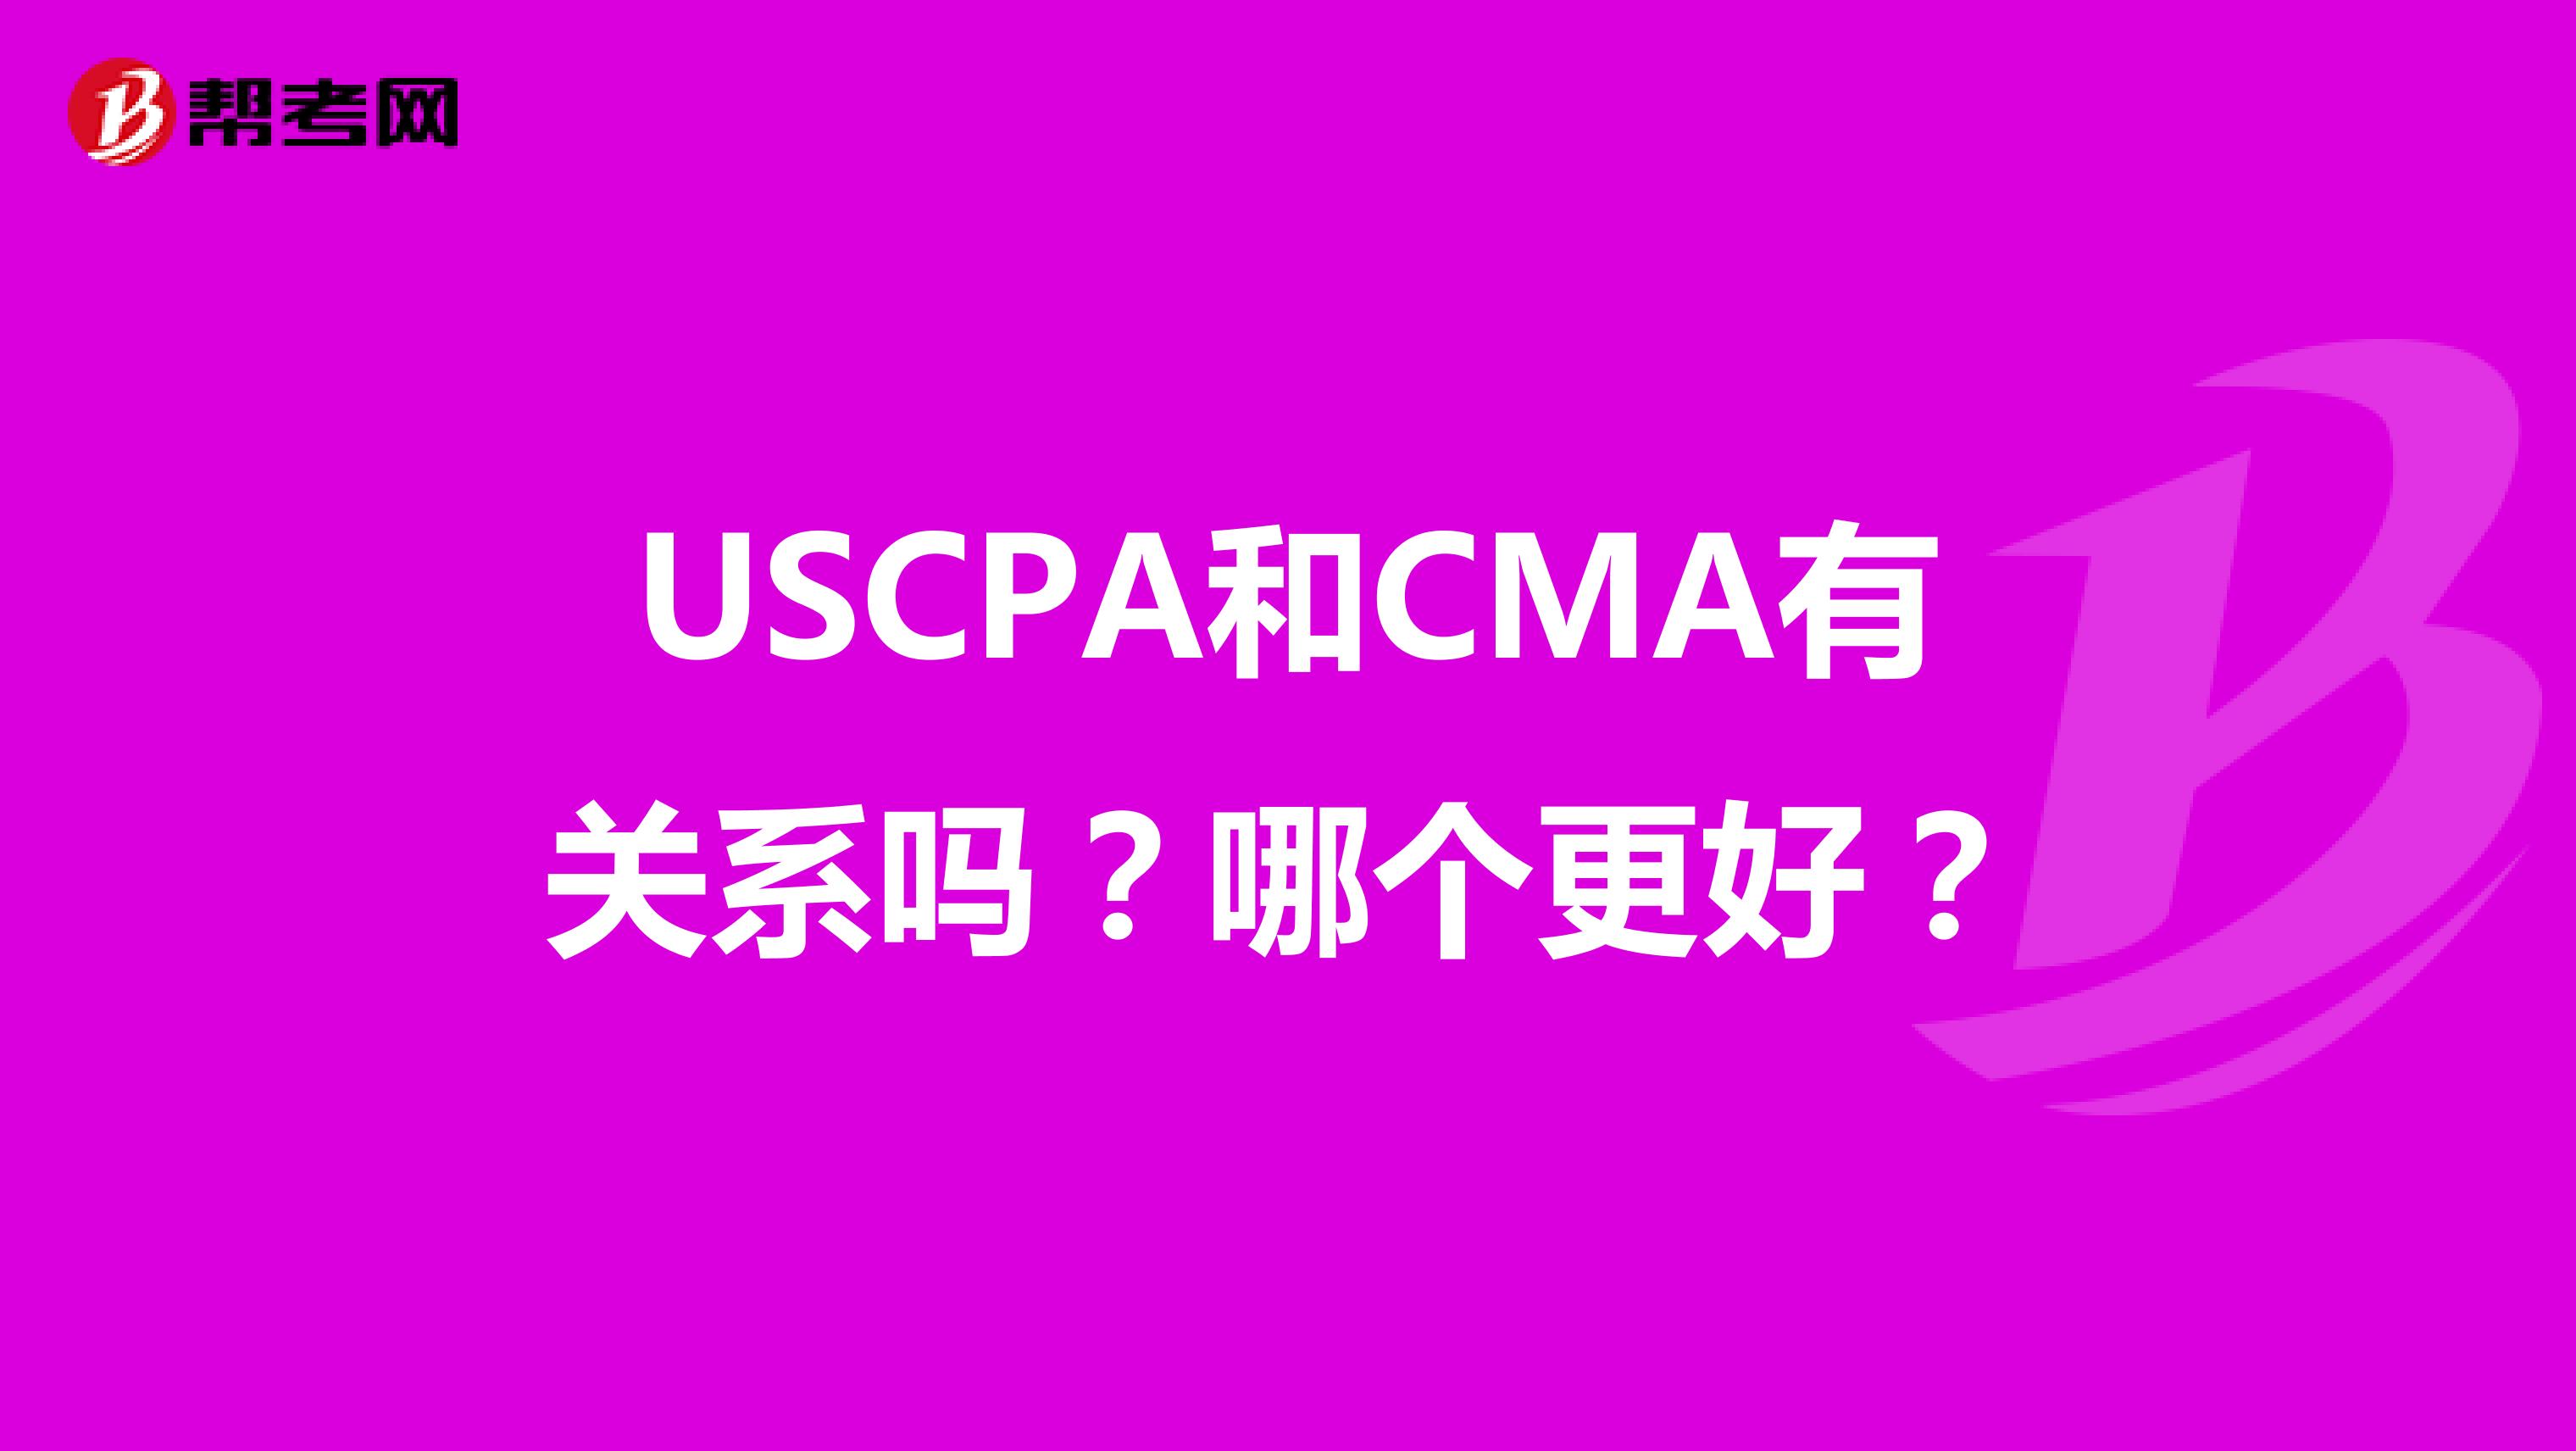 USCPA和CMA有关系吗？哪个更好？